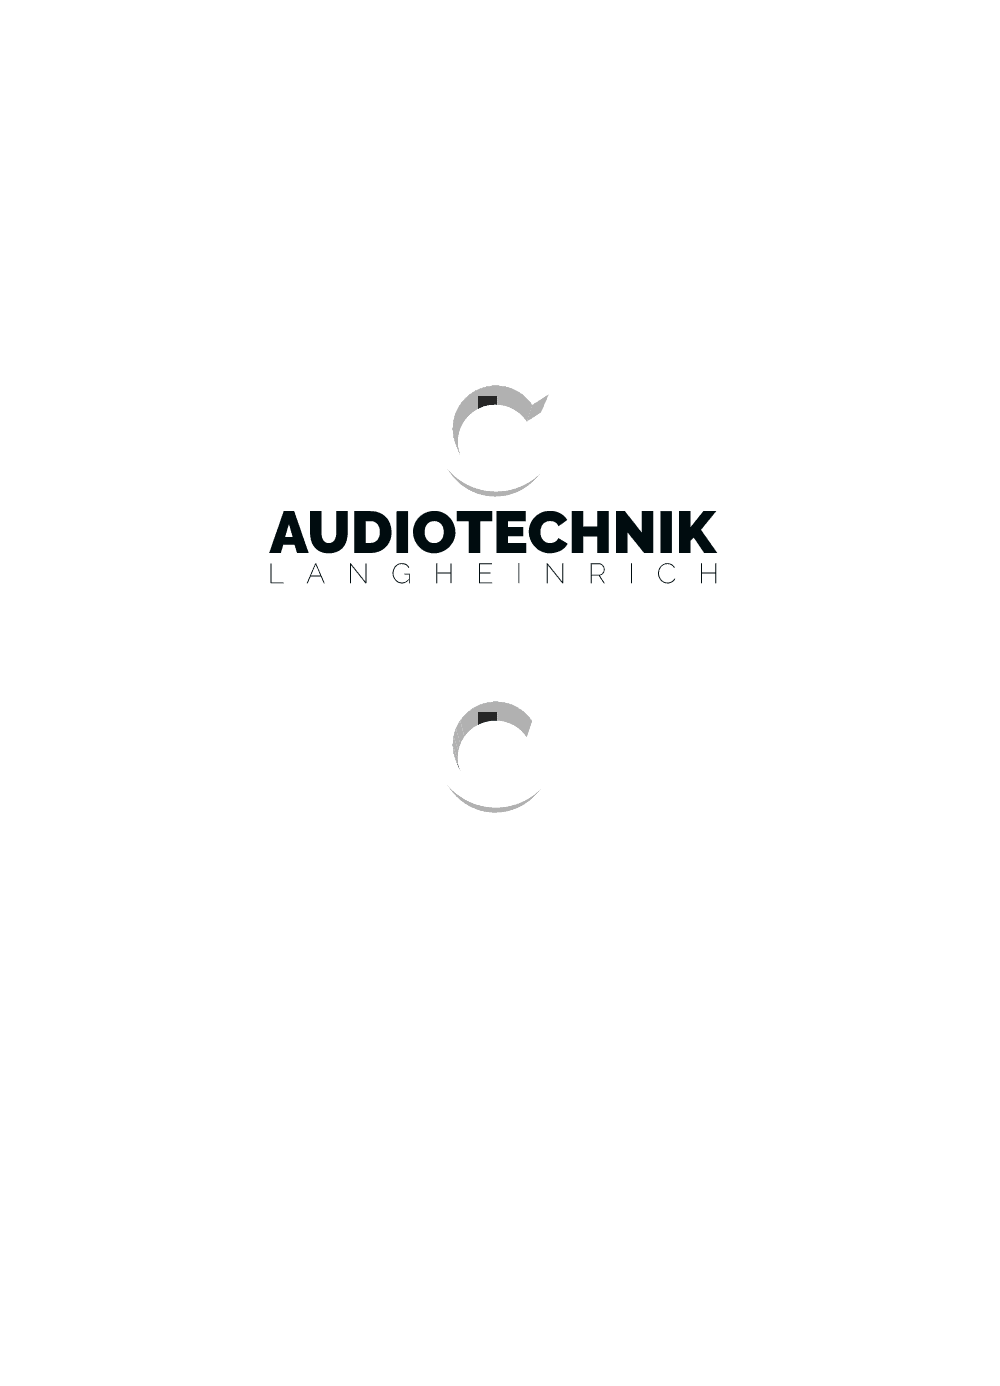 CL Audiotechnik Langheinrich Logo download